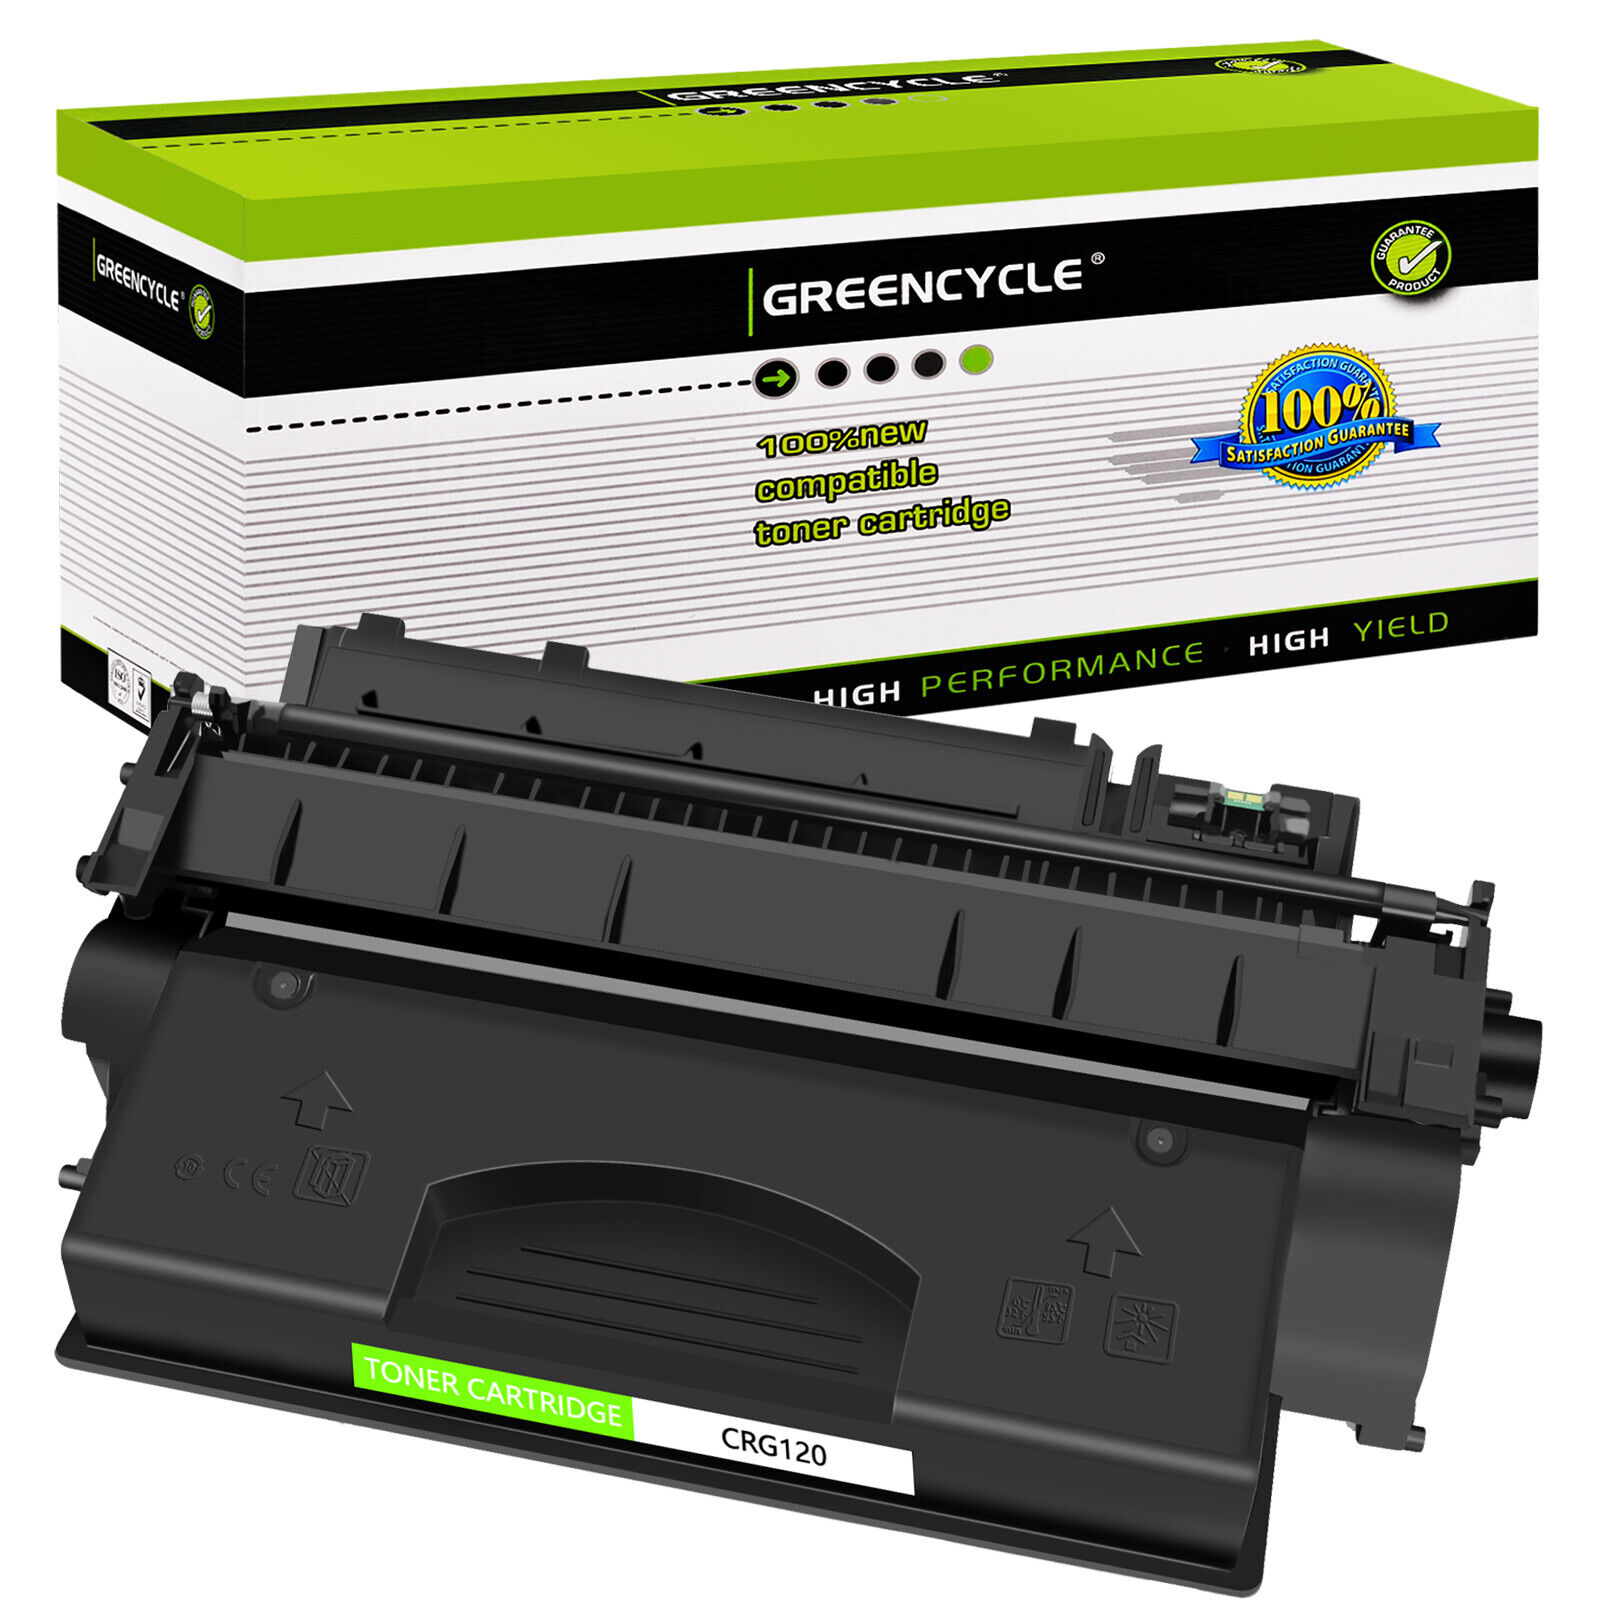 GREENCYCLE CRG120 C120 Toner Cartridge For Canon ImageClass D1520 D1550 D1120 